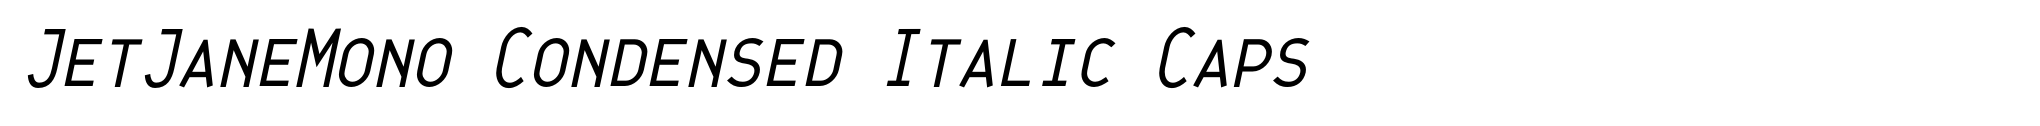 JetJaneMono Condensed Italic Caps image